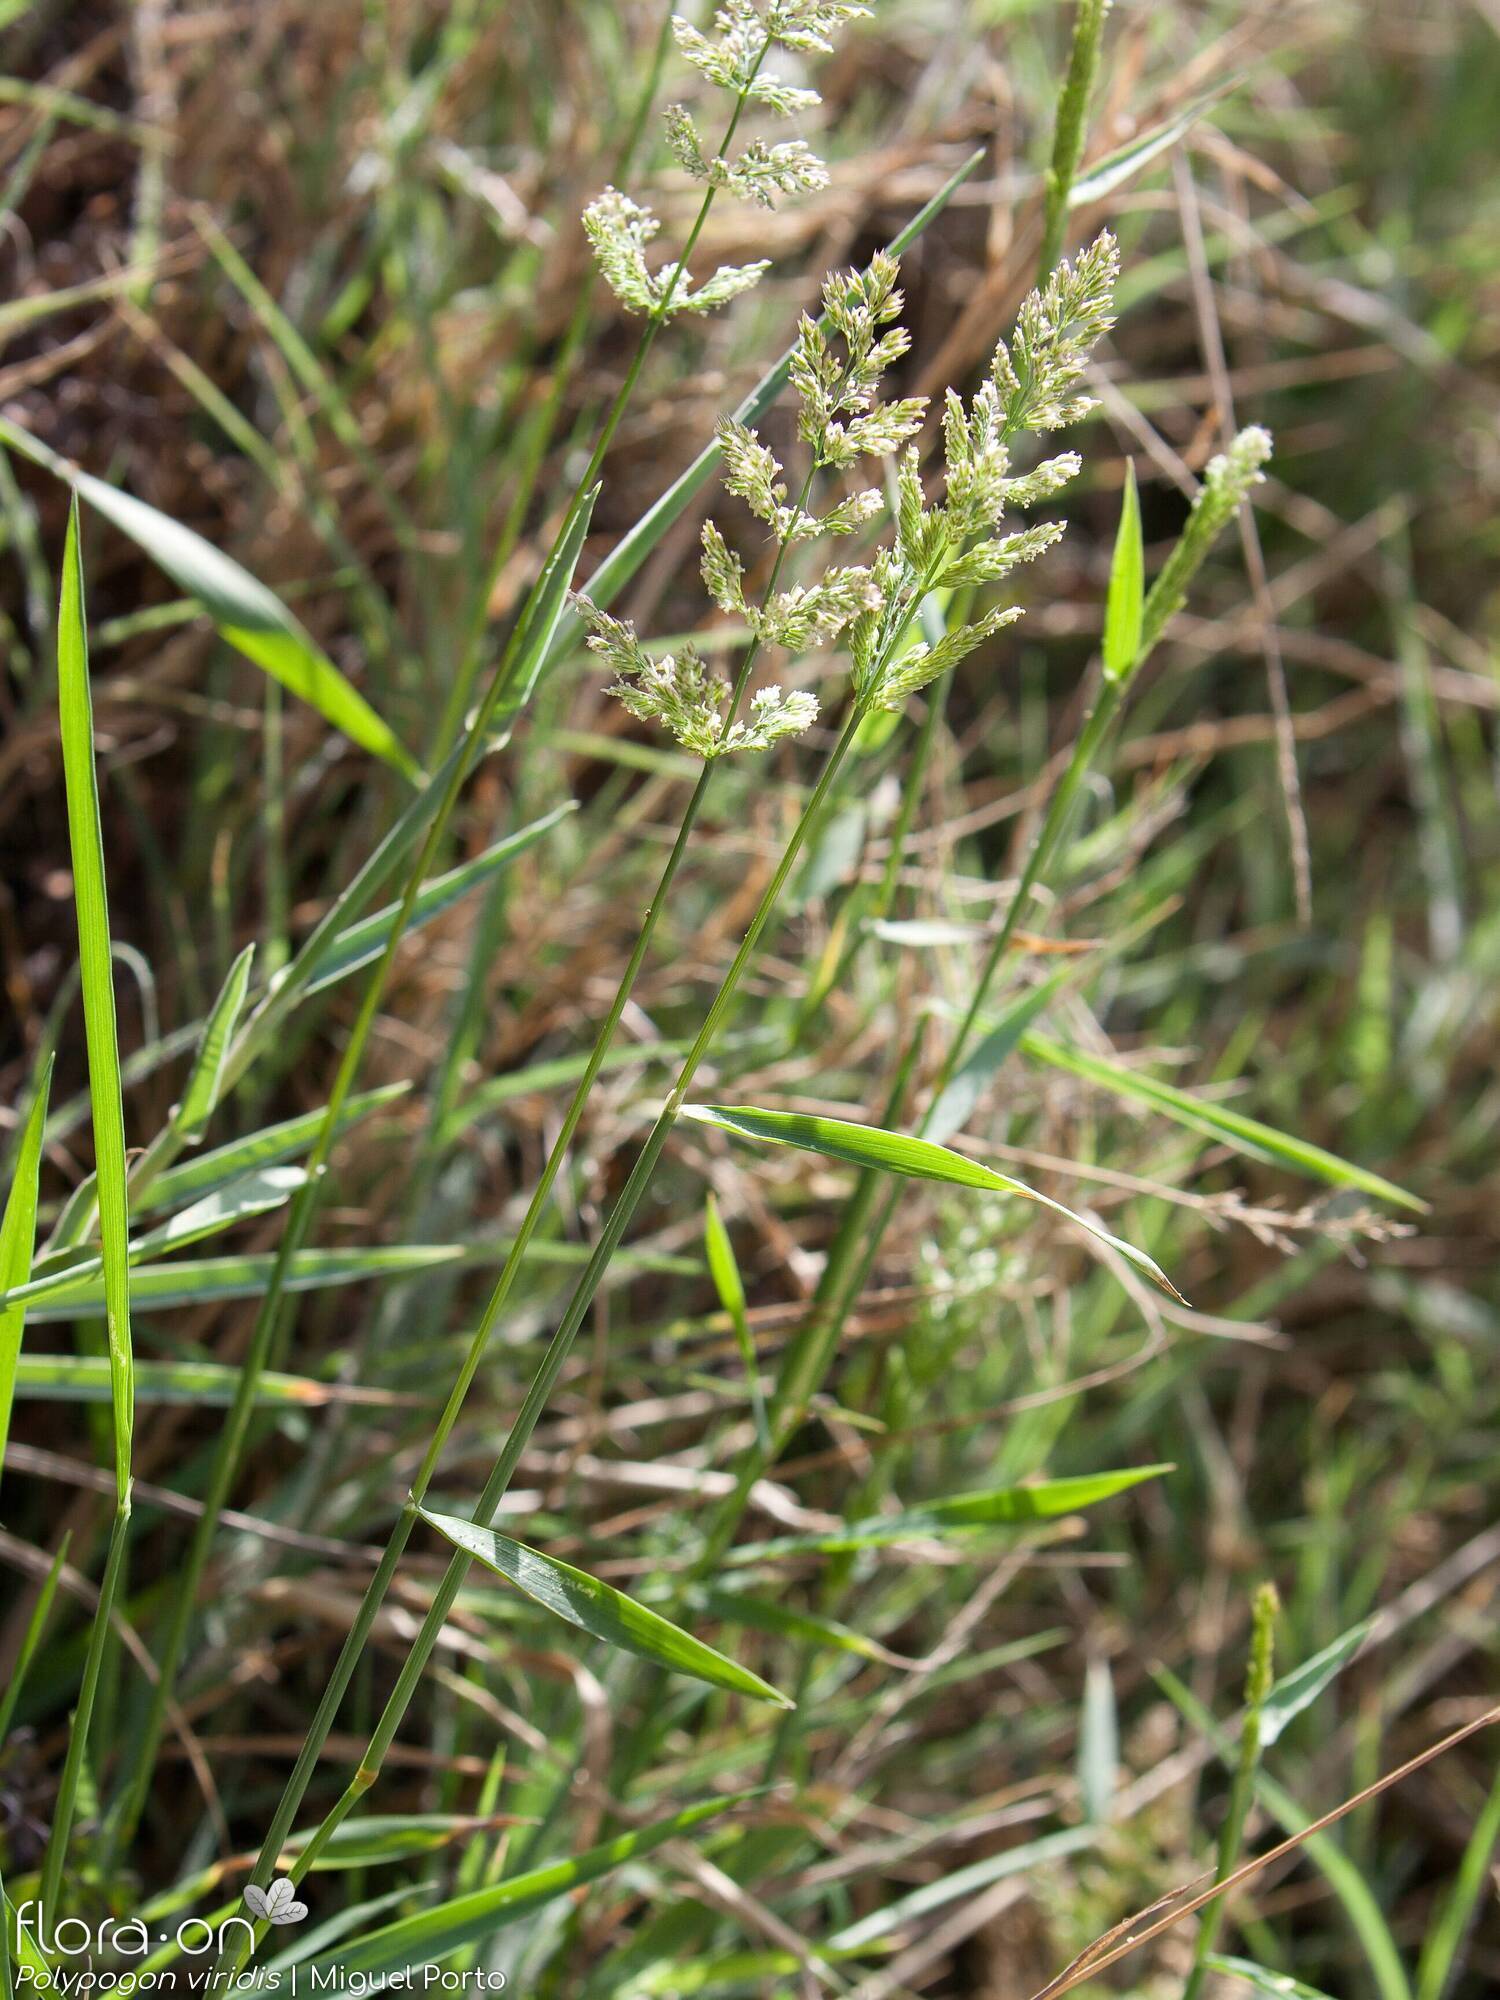 Polypogon viridis - Hábito | Miguel Porto; CC BY-NC 4.0